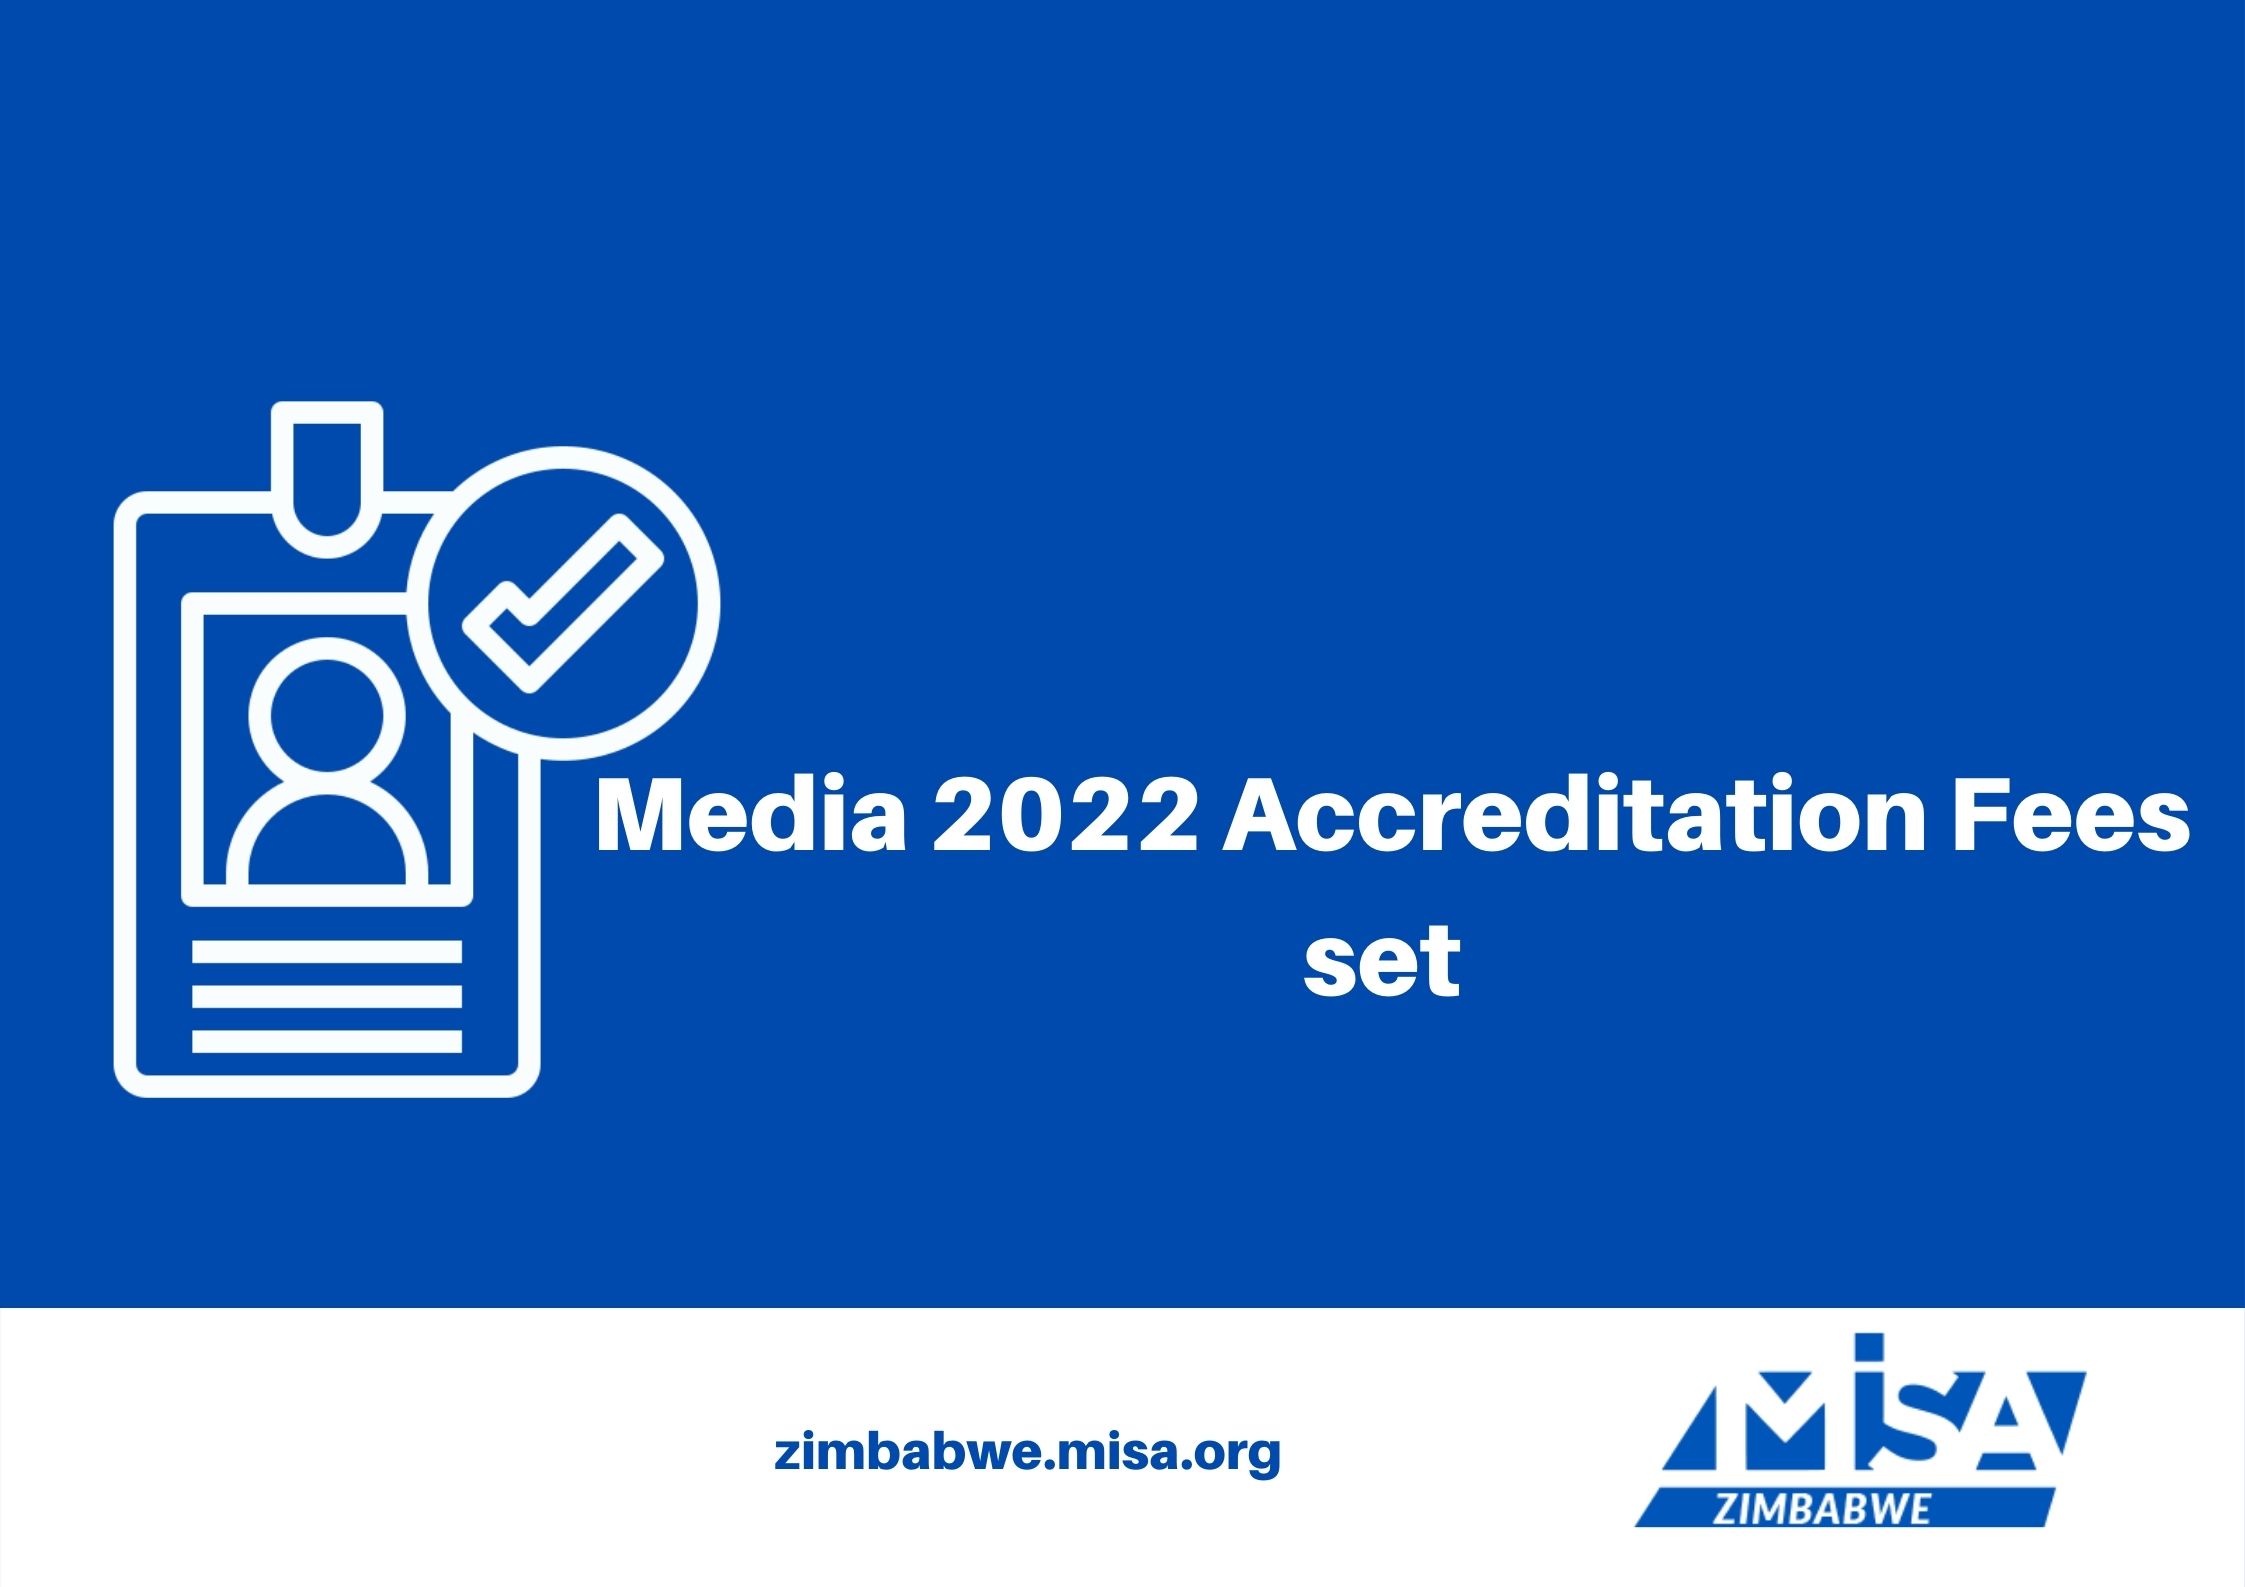 Media 2022 Accreditation Fees set